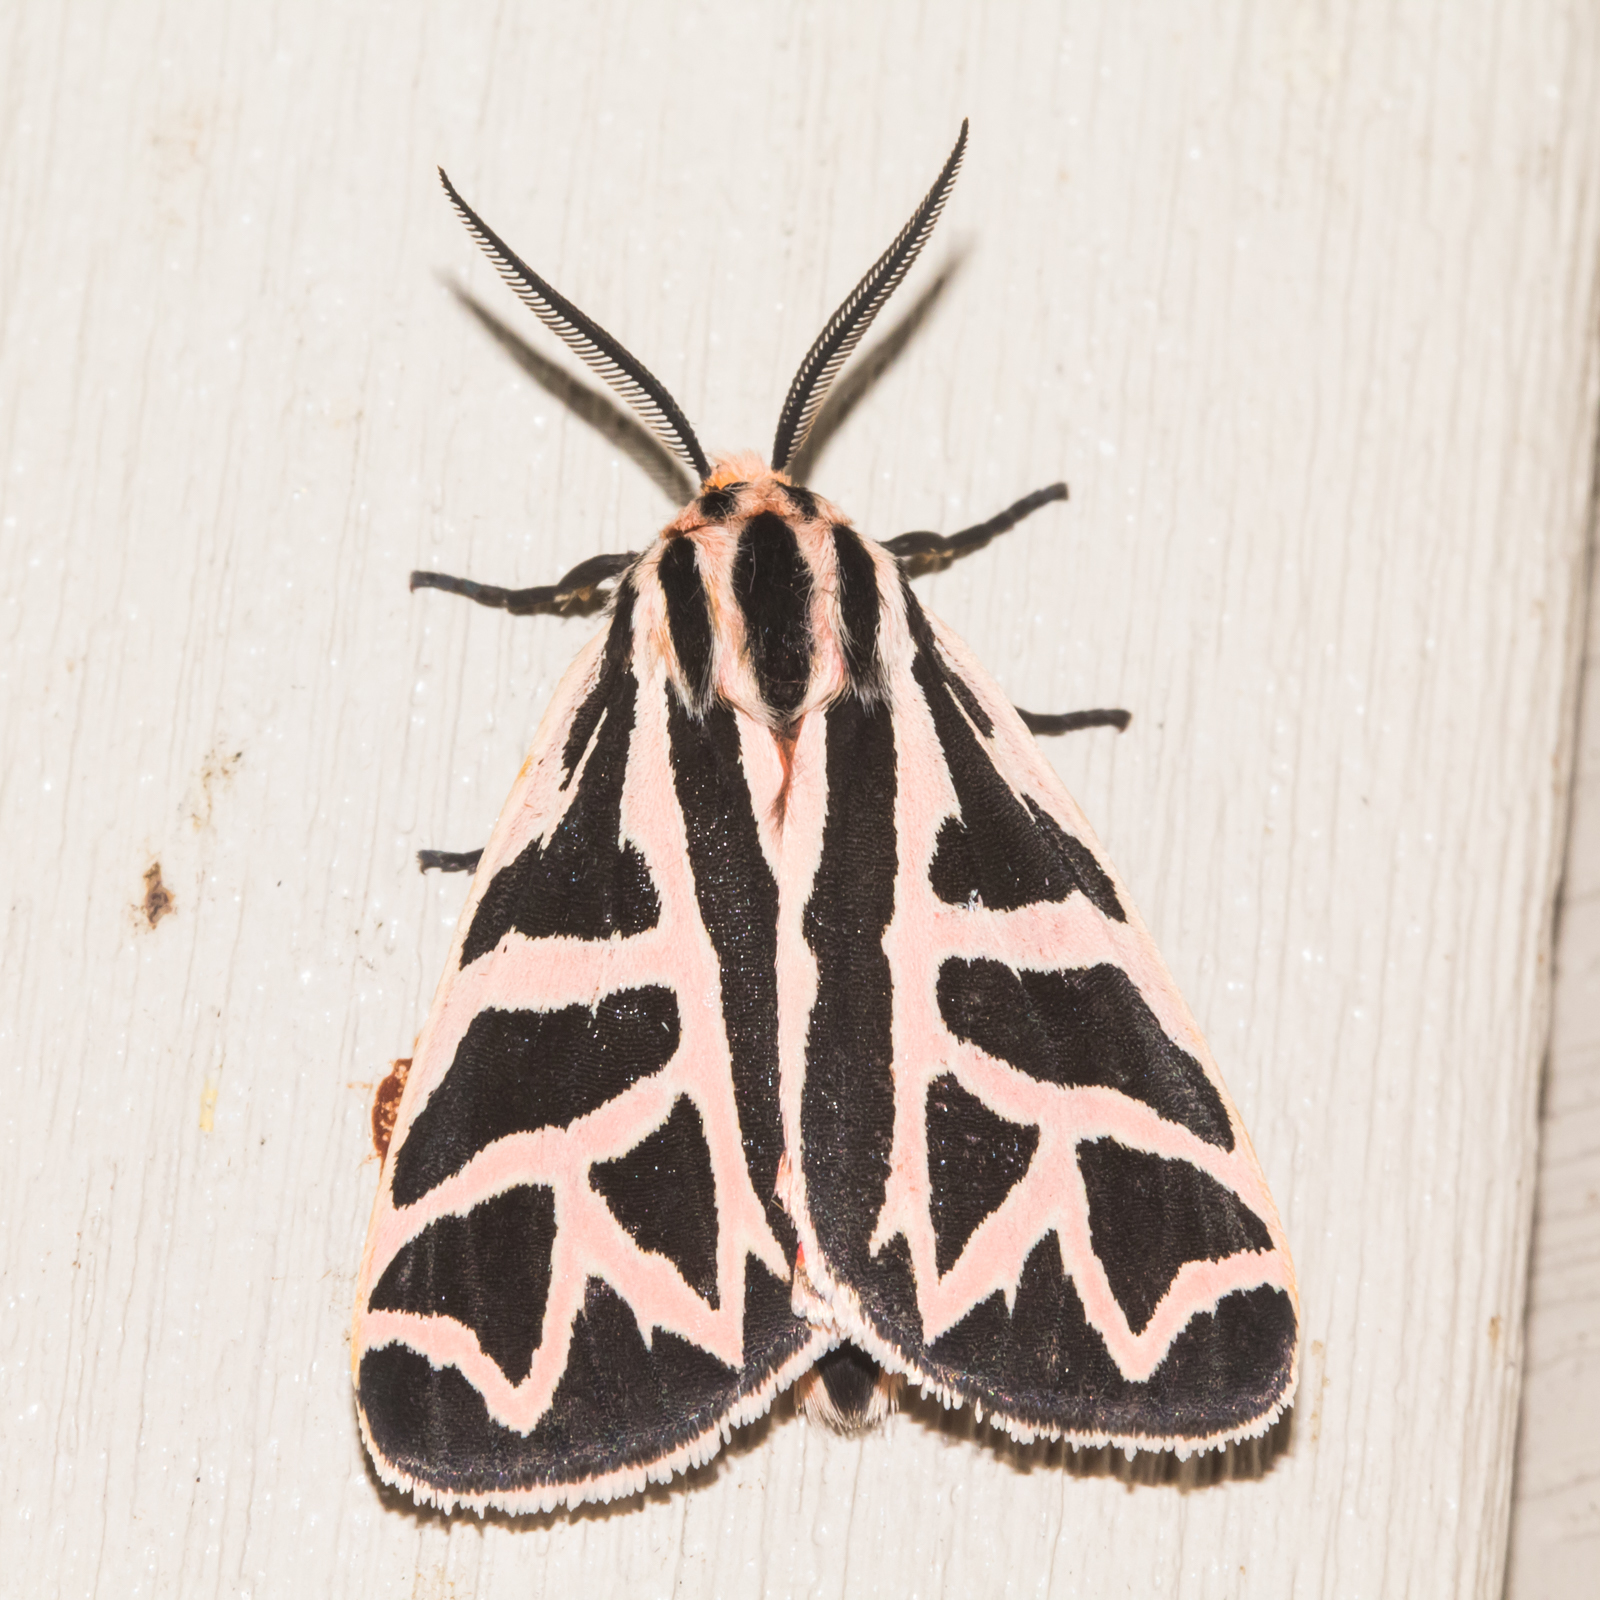 Standard Mothban Moth Killer - Science History Institute Digital